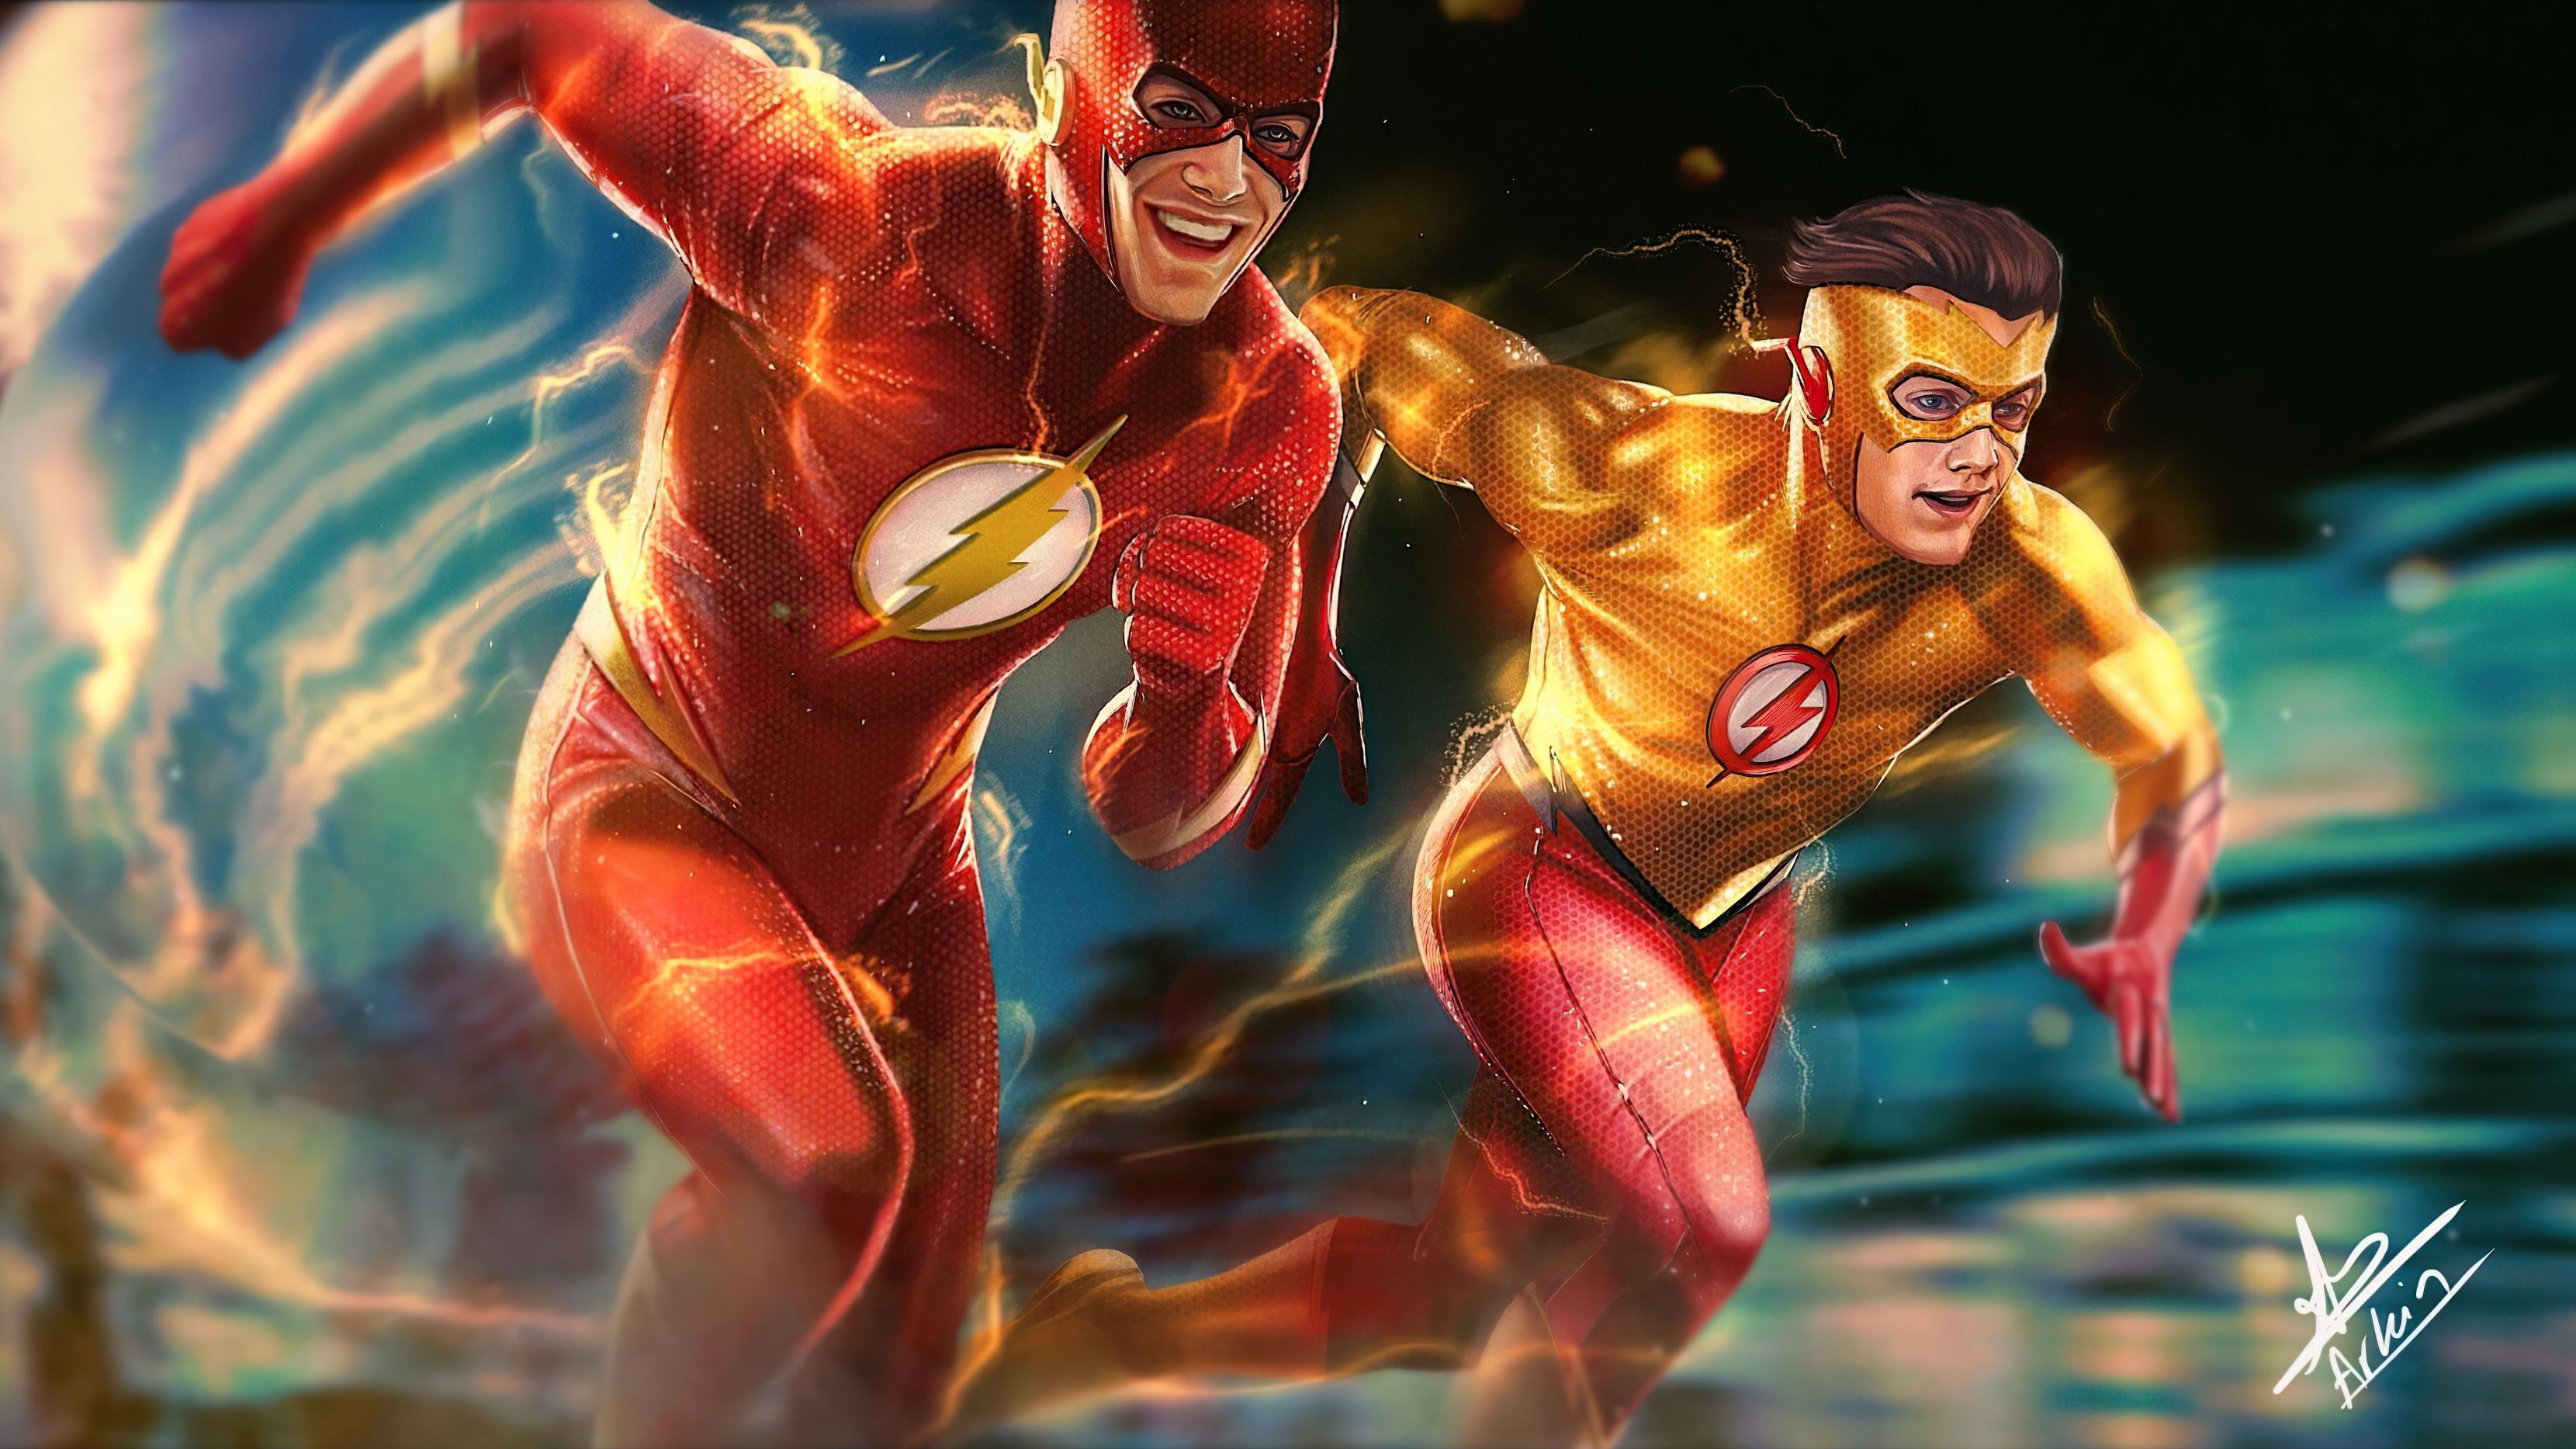 Flash and Kid Flash DC Comic Wallpaper, HD Superheroes 4K Wallpapers, Image...